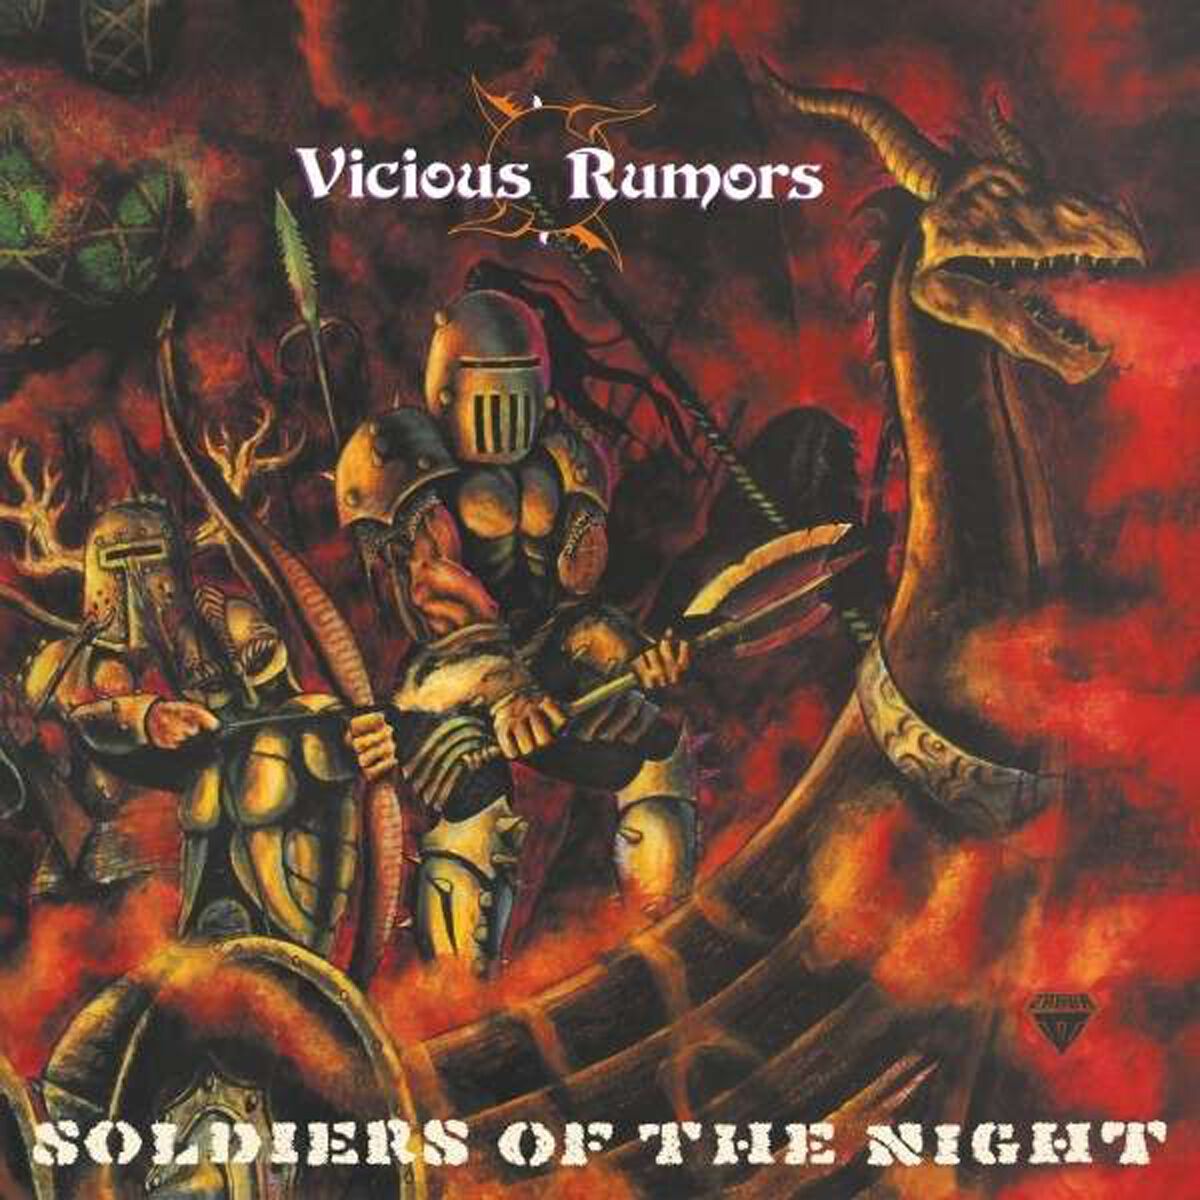 Soldiers of the night von Vicious Rumors - LP (Standard)